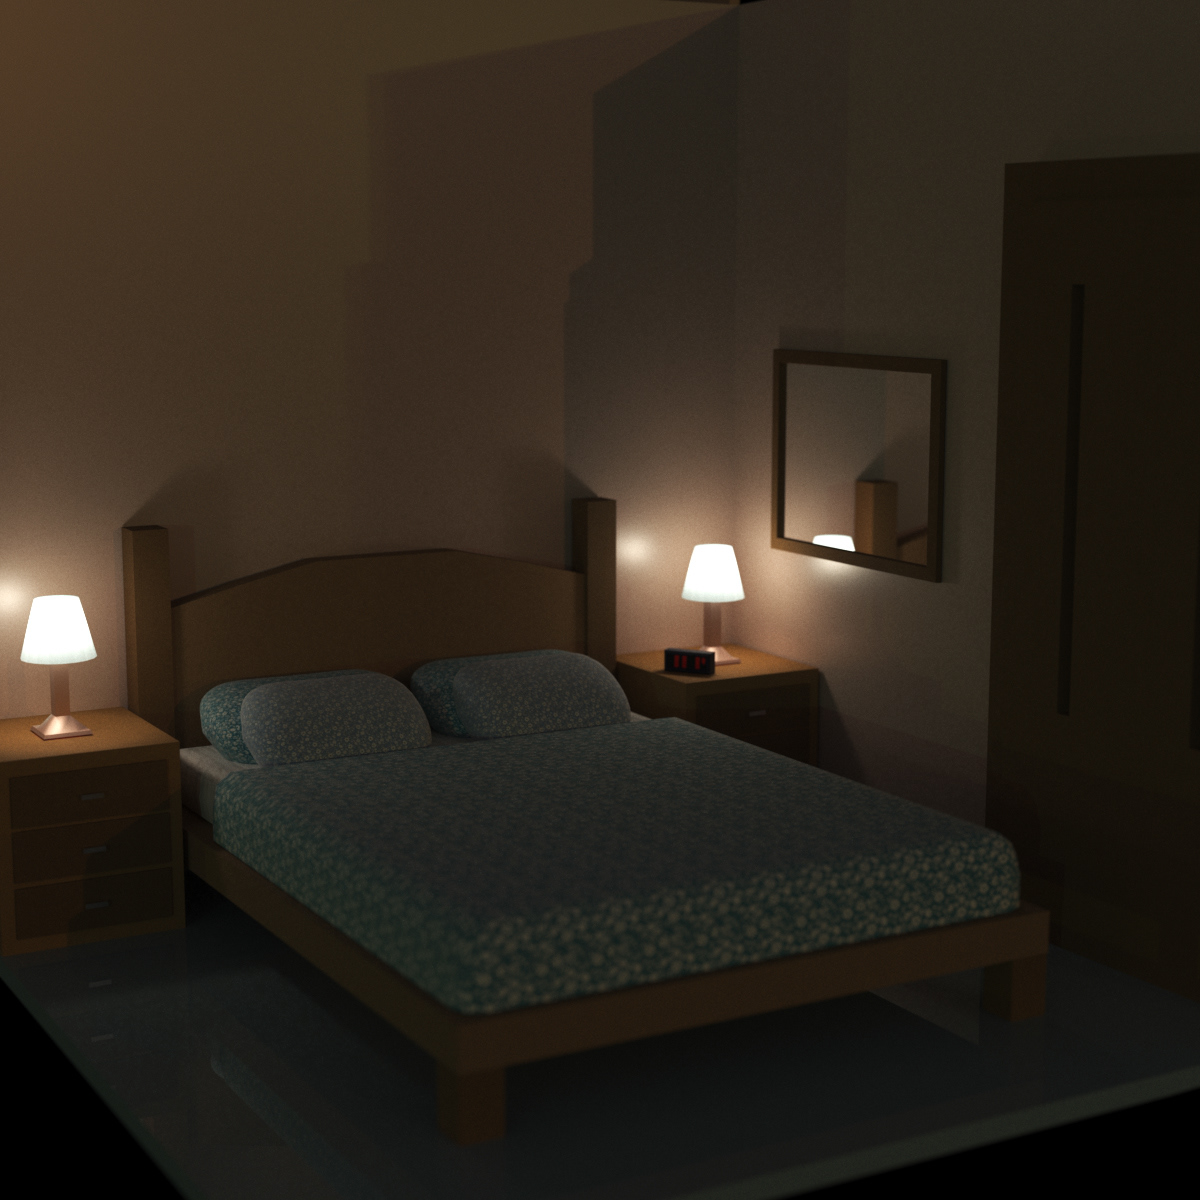 3ds max architecture Render interior design  CGI 3D dollhouse room design illumination 3d art